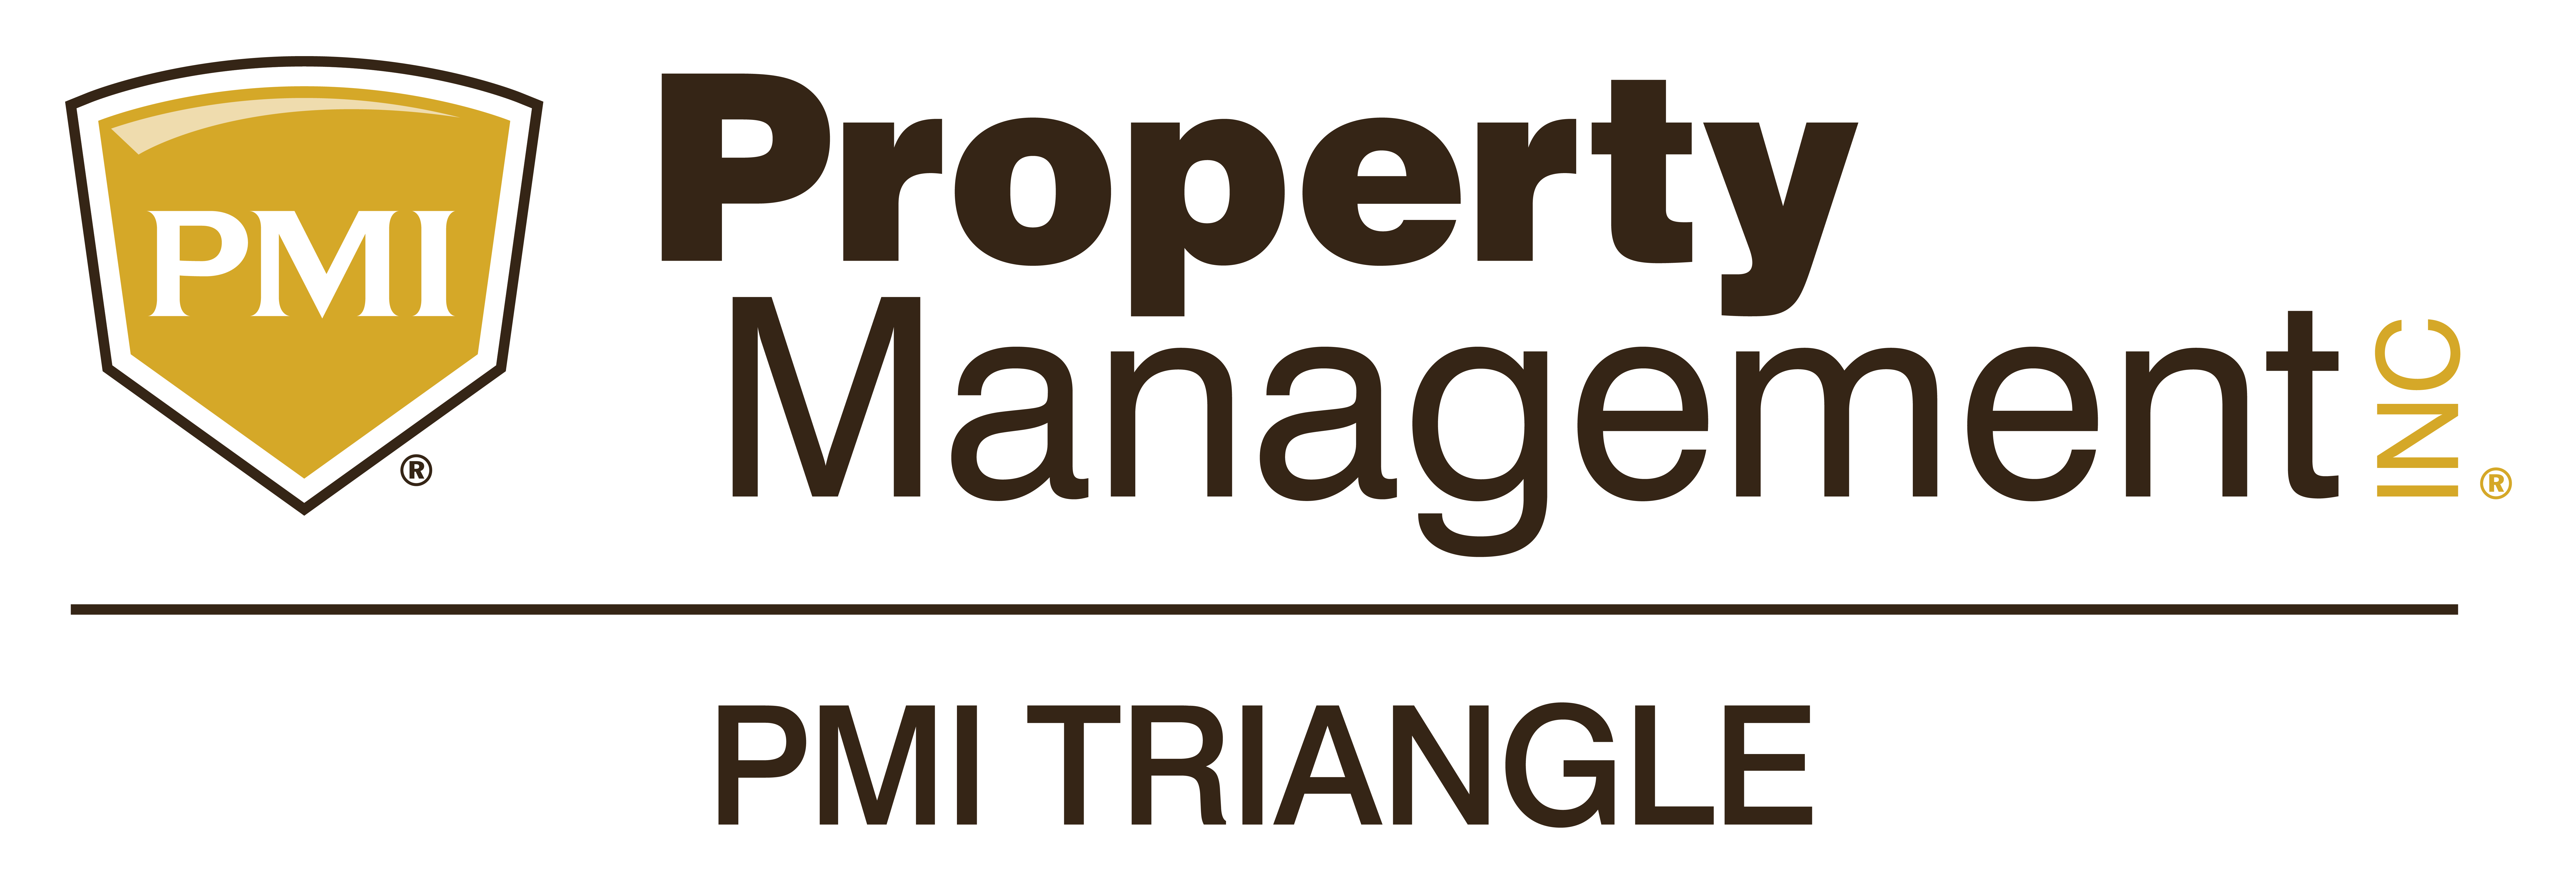 PMI Triangle logo